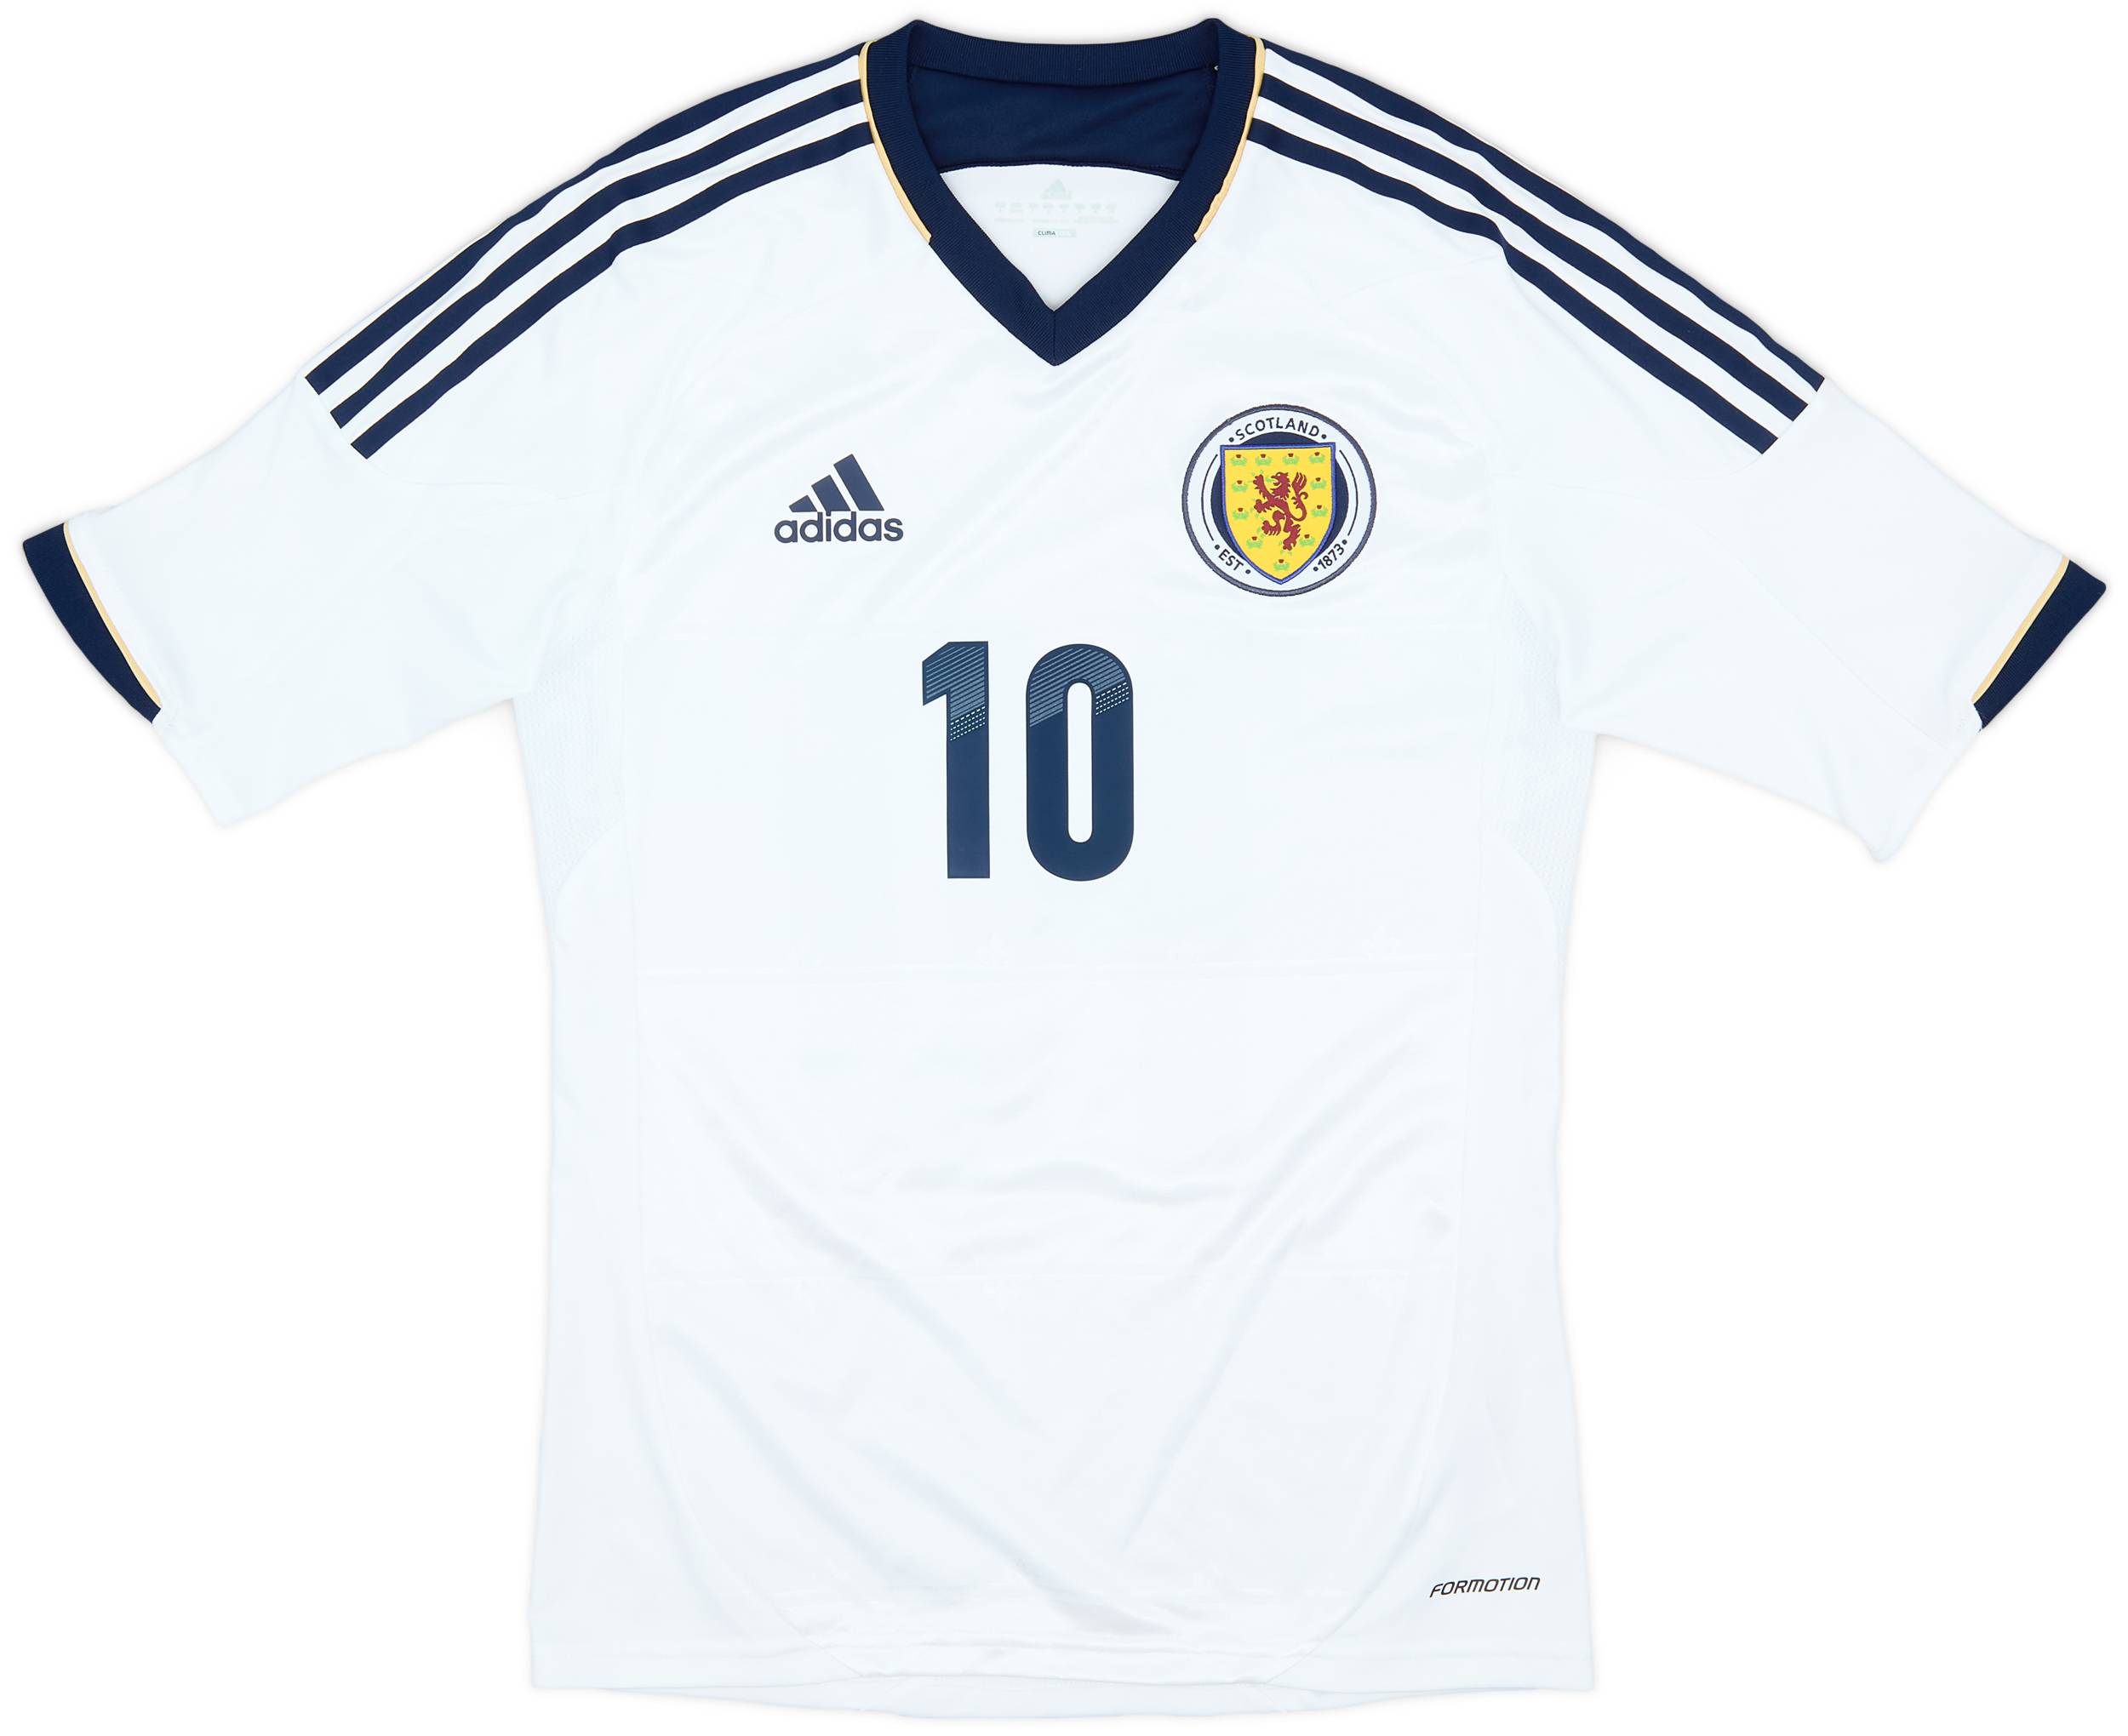 2012-14 Scotland Authentic Away Shirt #10 - 9/10 - (S)